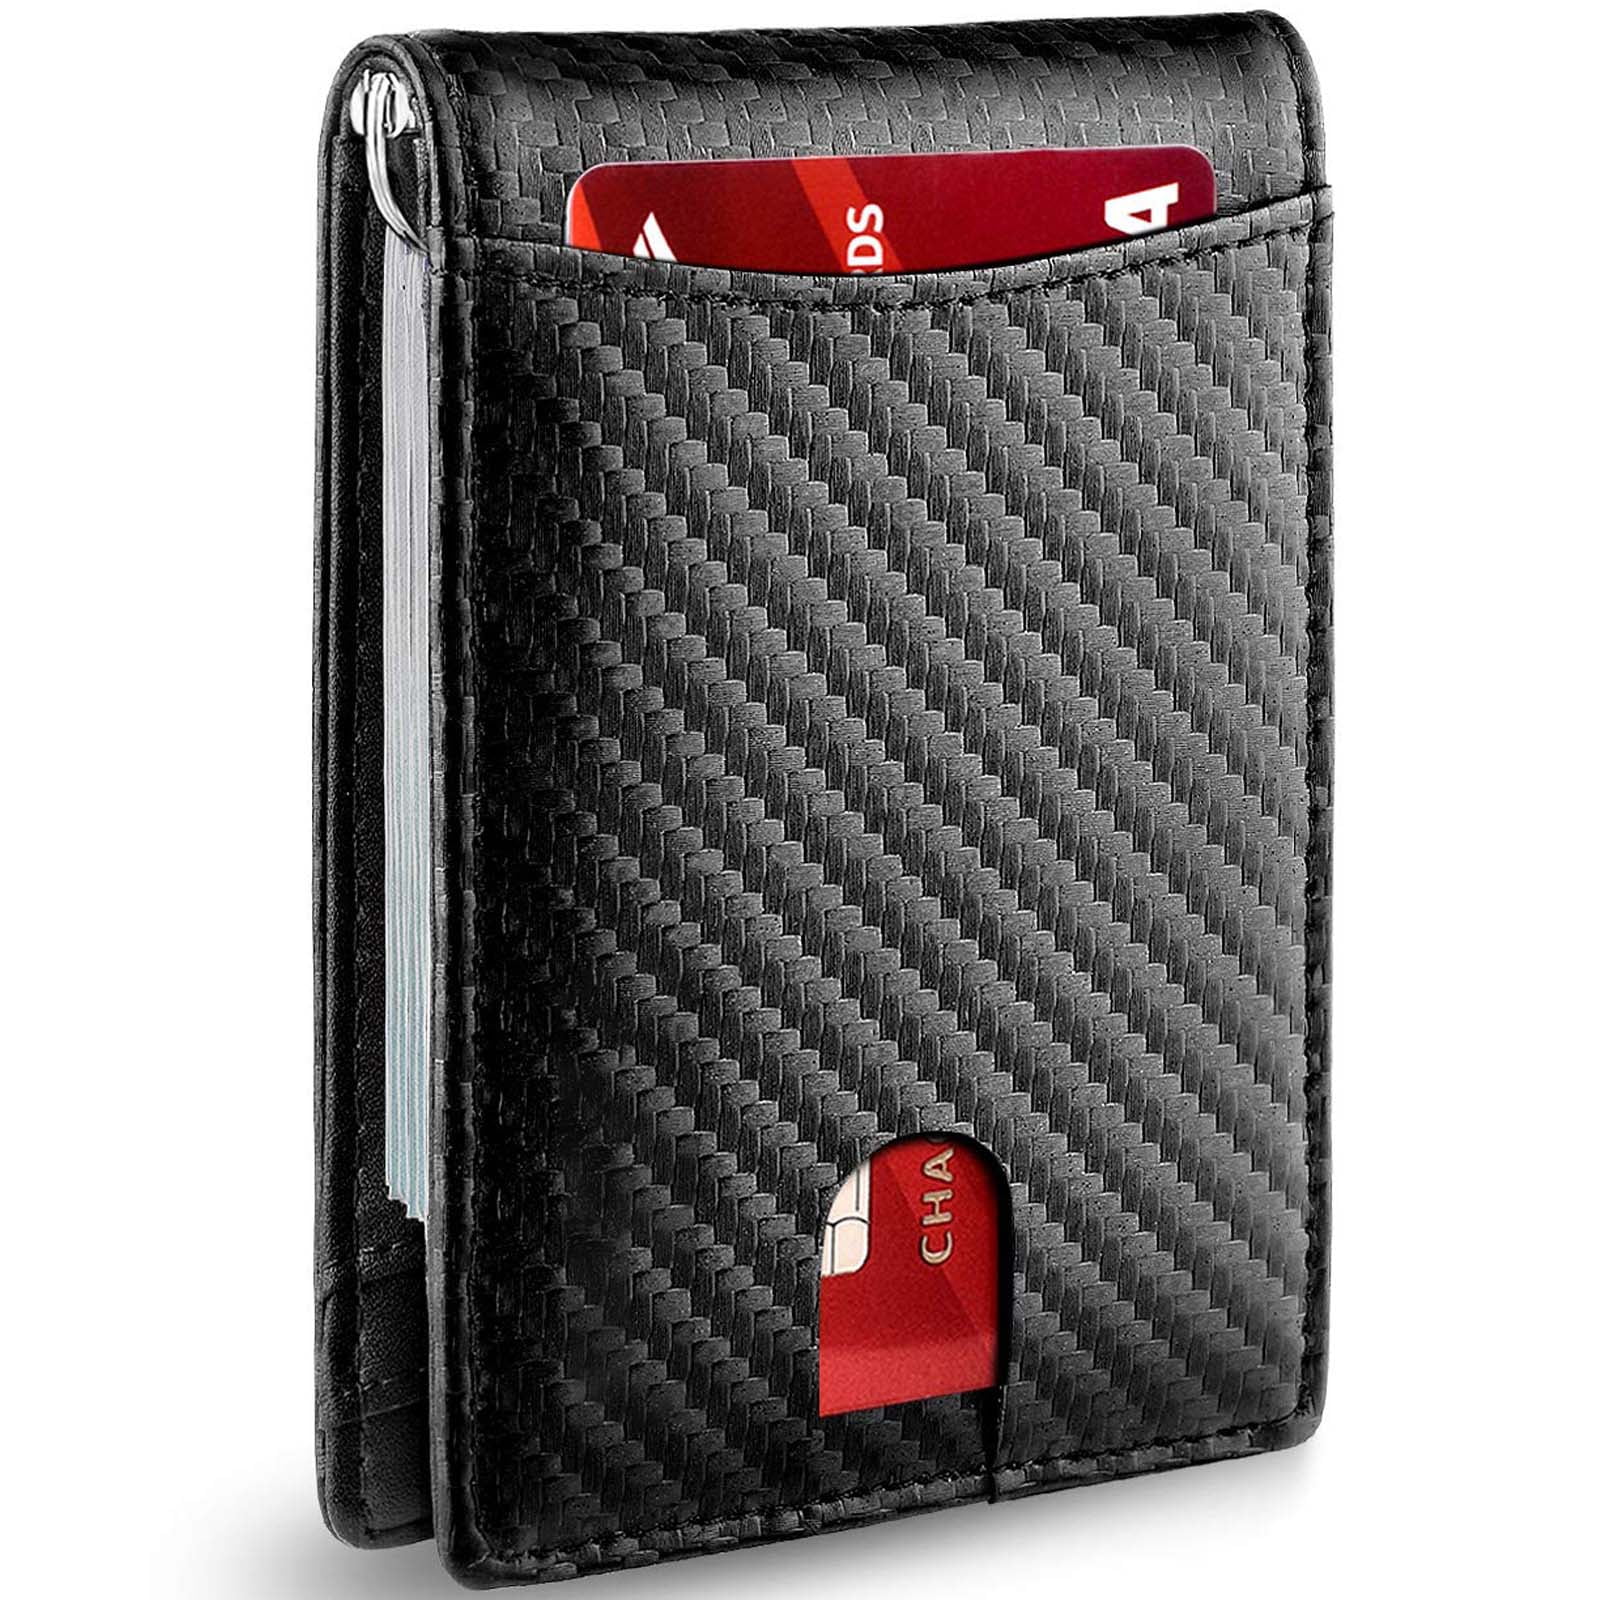 Slim Front Pocket RFID Blocking Wallet For Daily Use Mens Minimalist Wallets